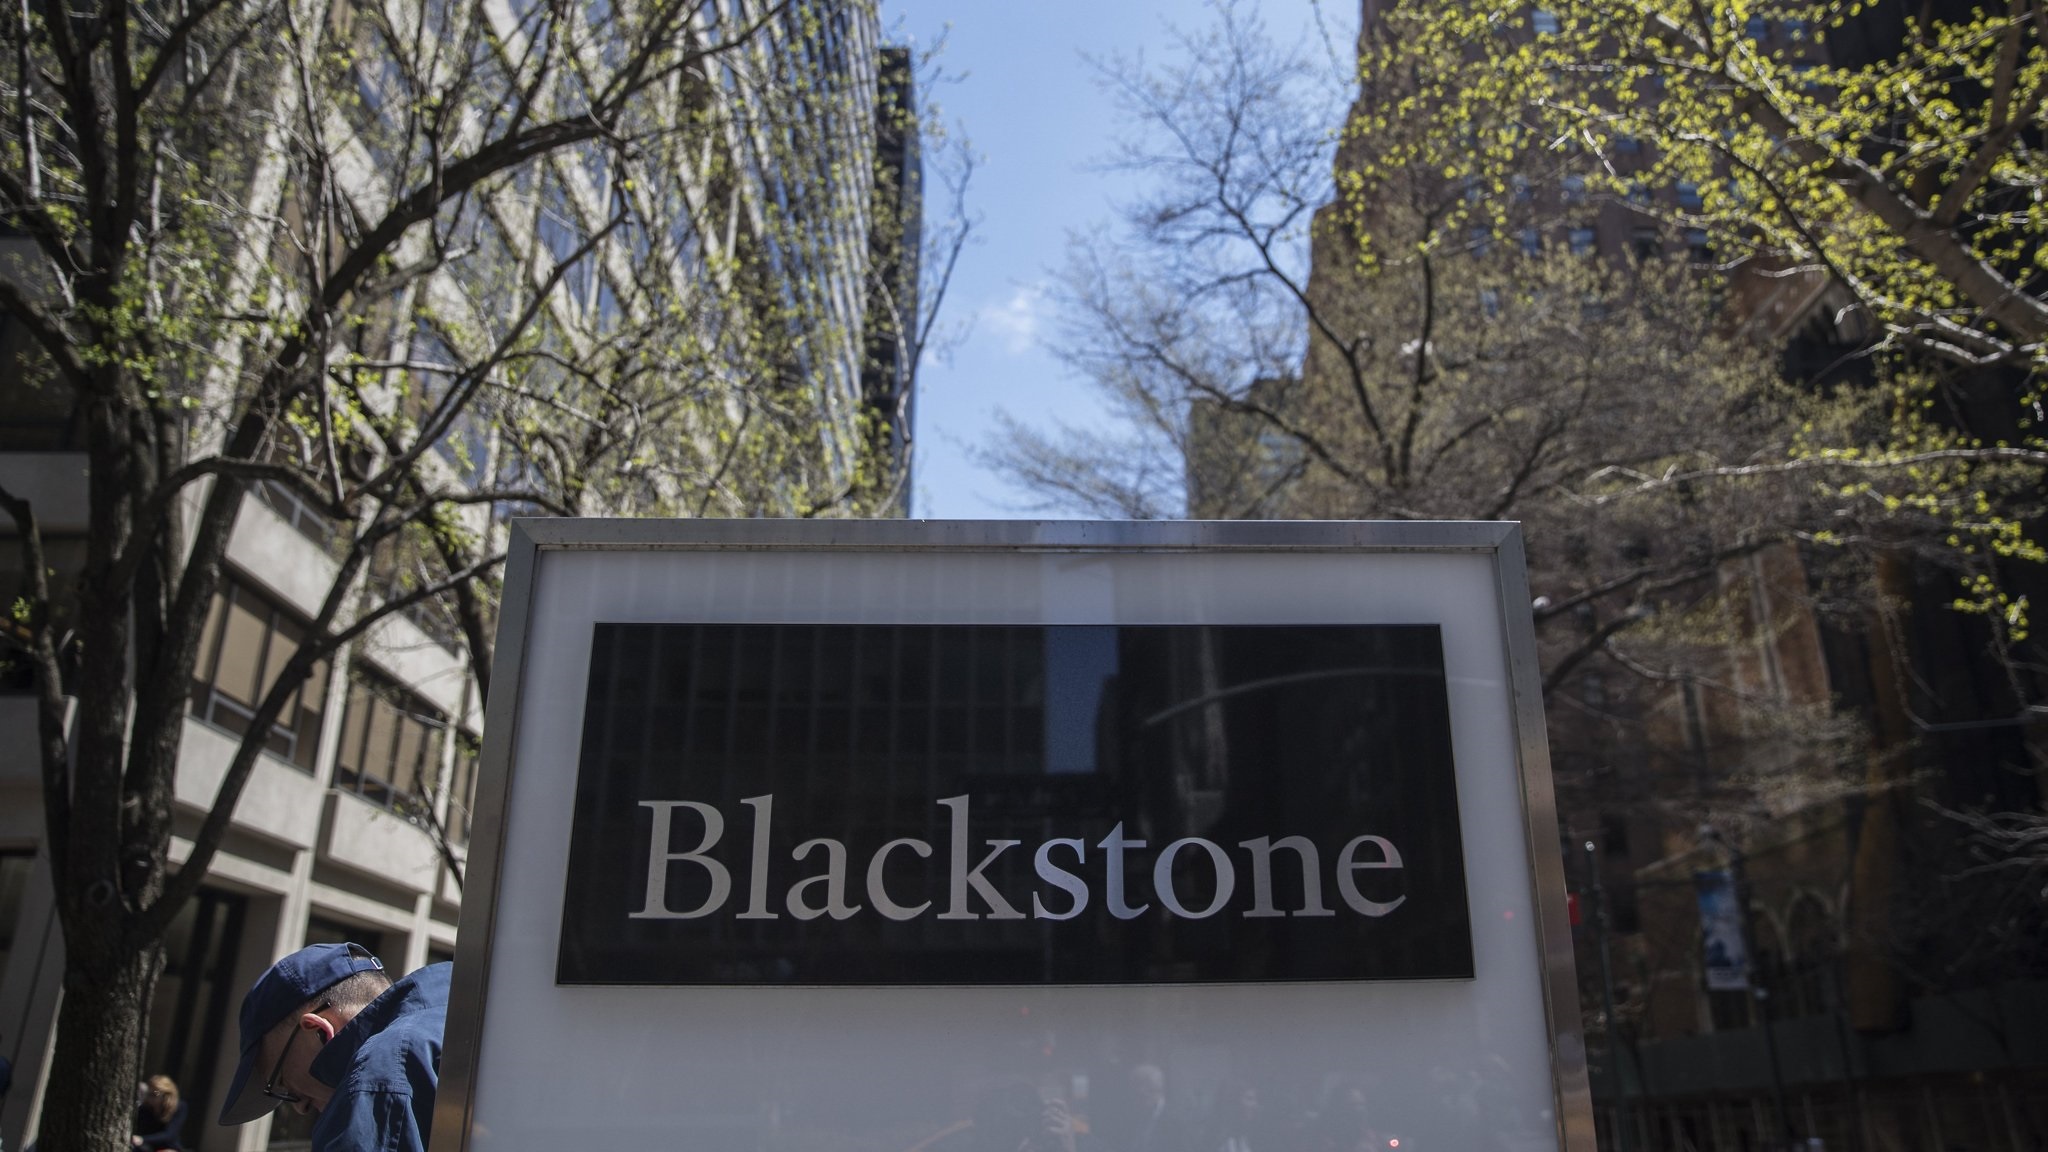 Blackstone: Ο επενδυτικός γίγαντας μυρίζεται κέρδη στις ασφάλειες με την βοήθεια της ΑΙ